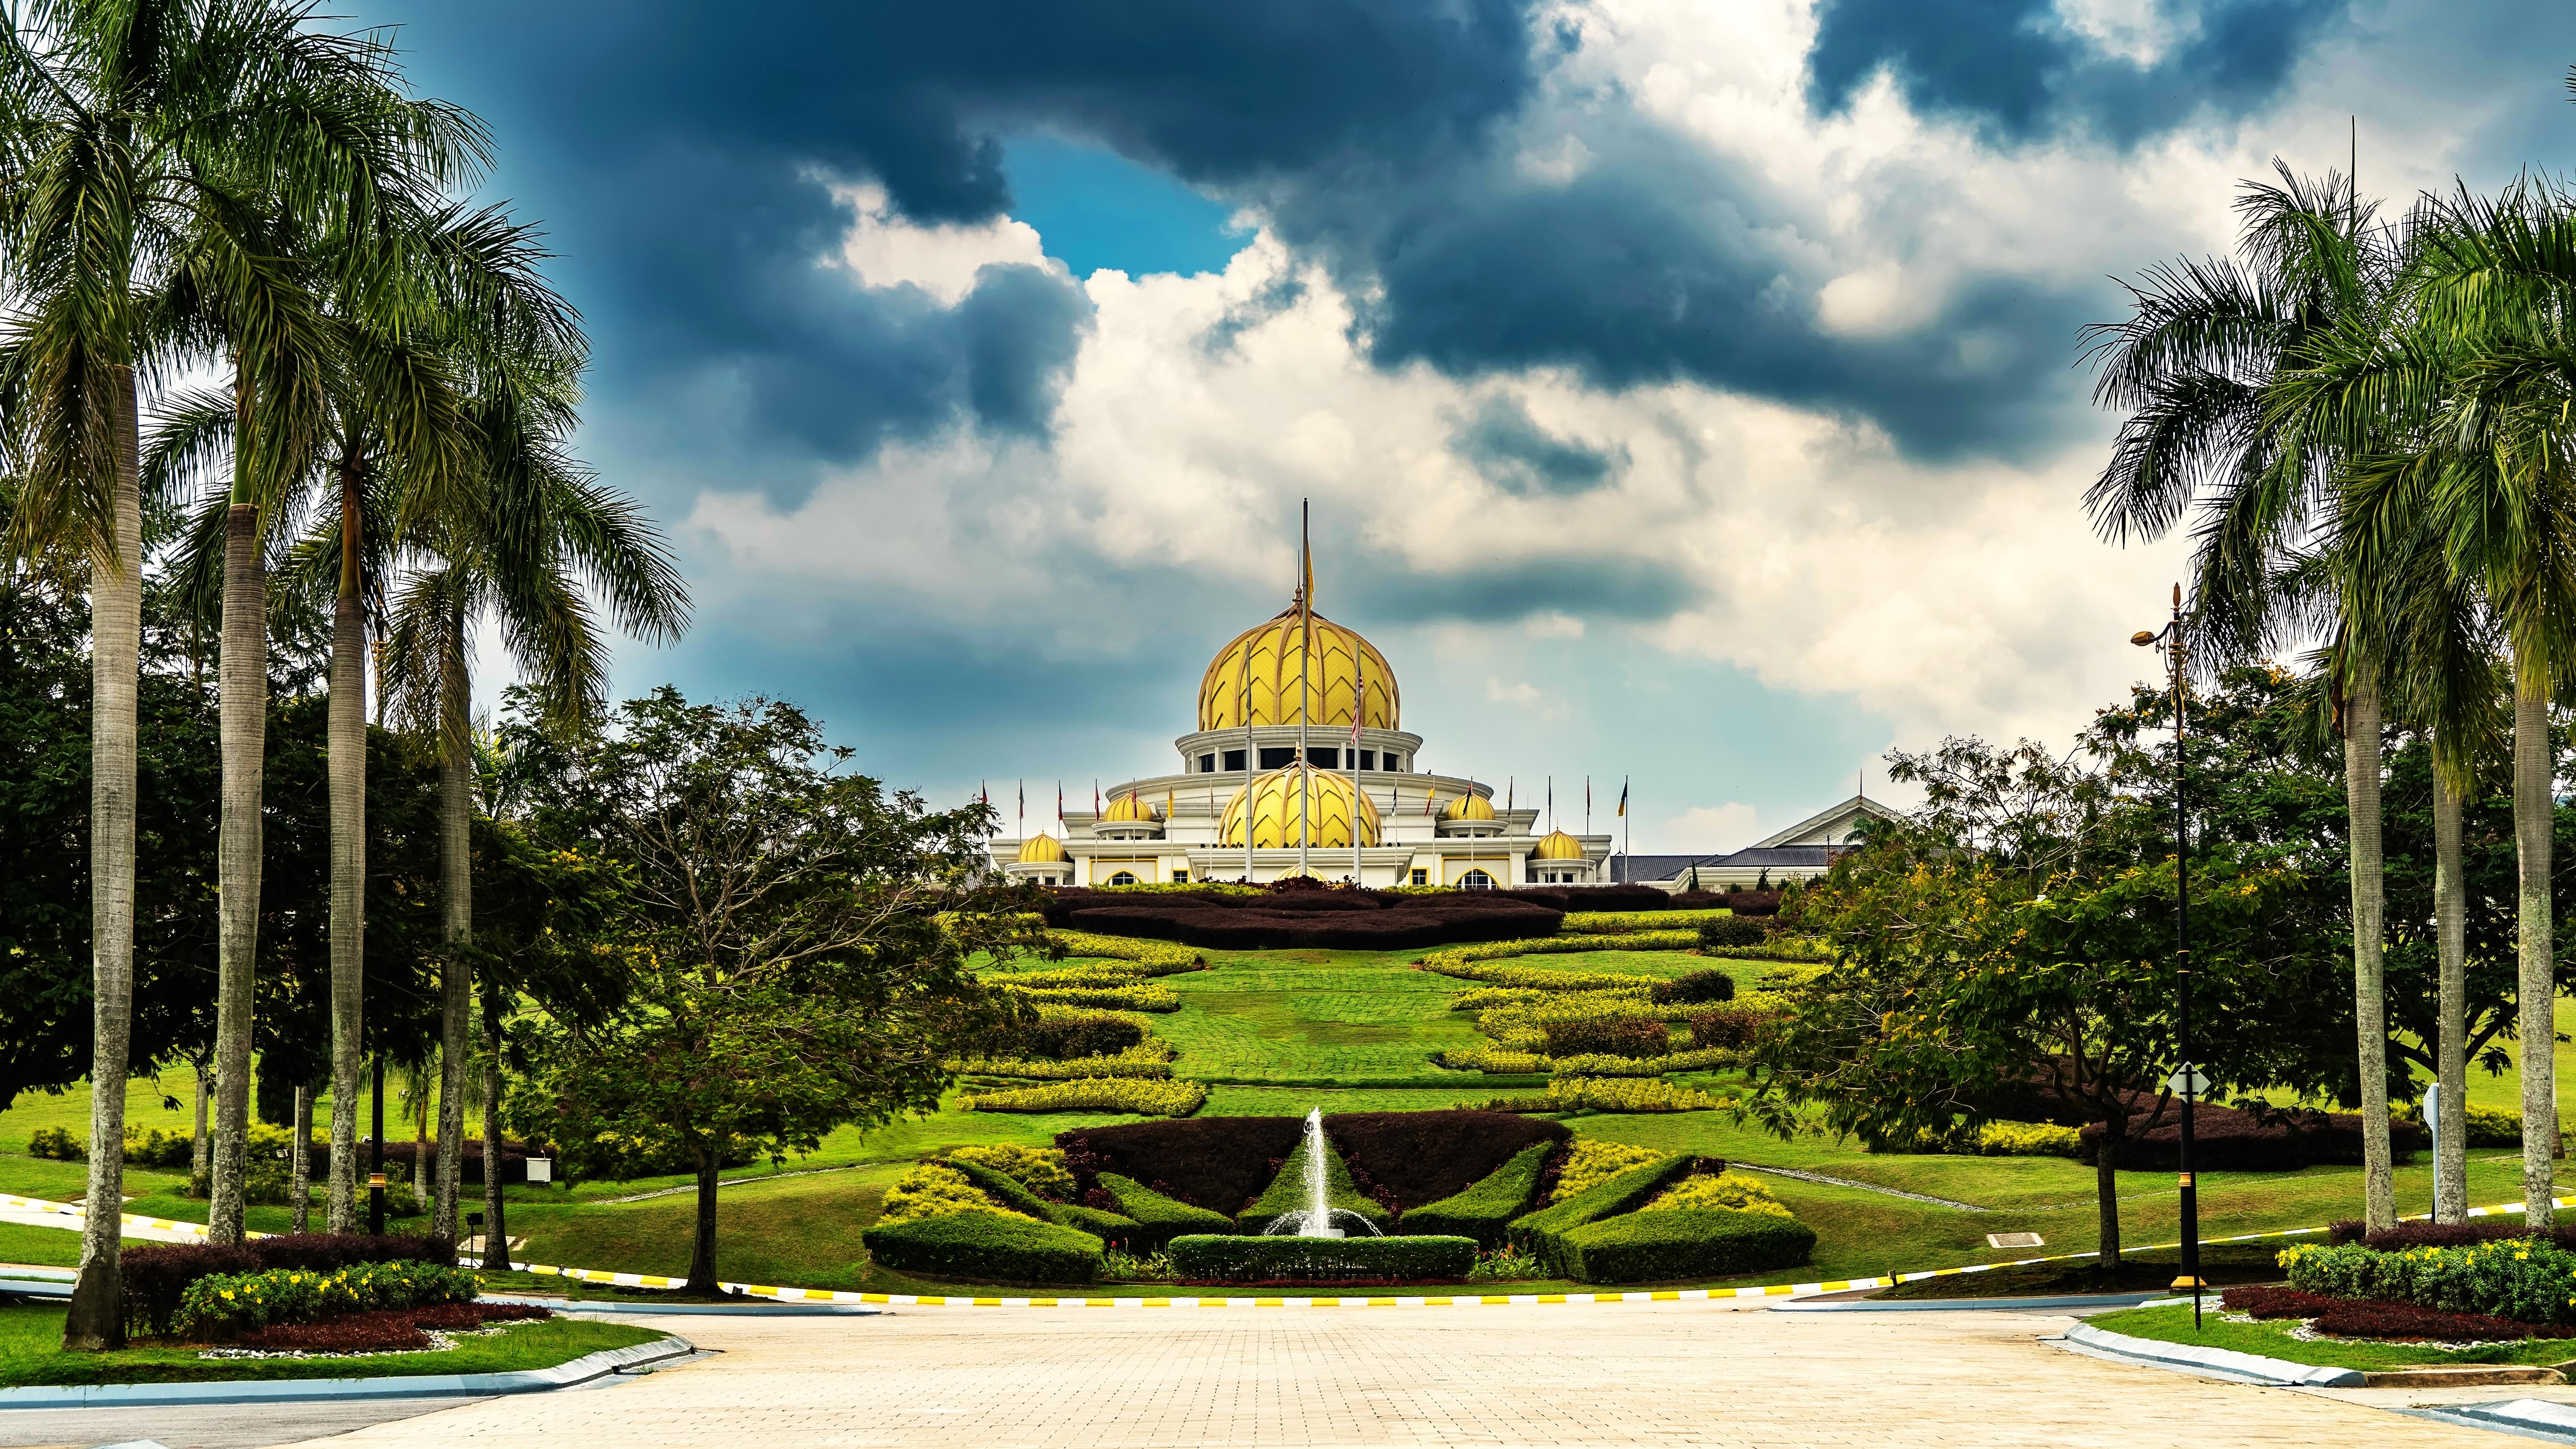 The beautiful presidential palace Istana Negara